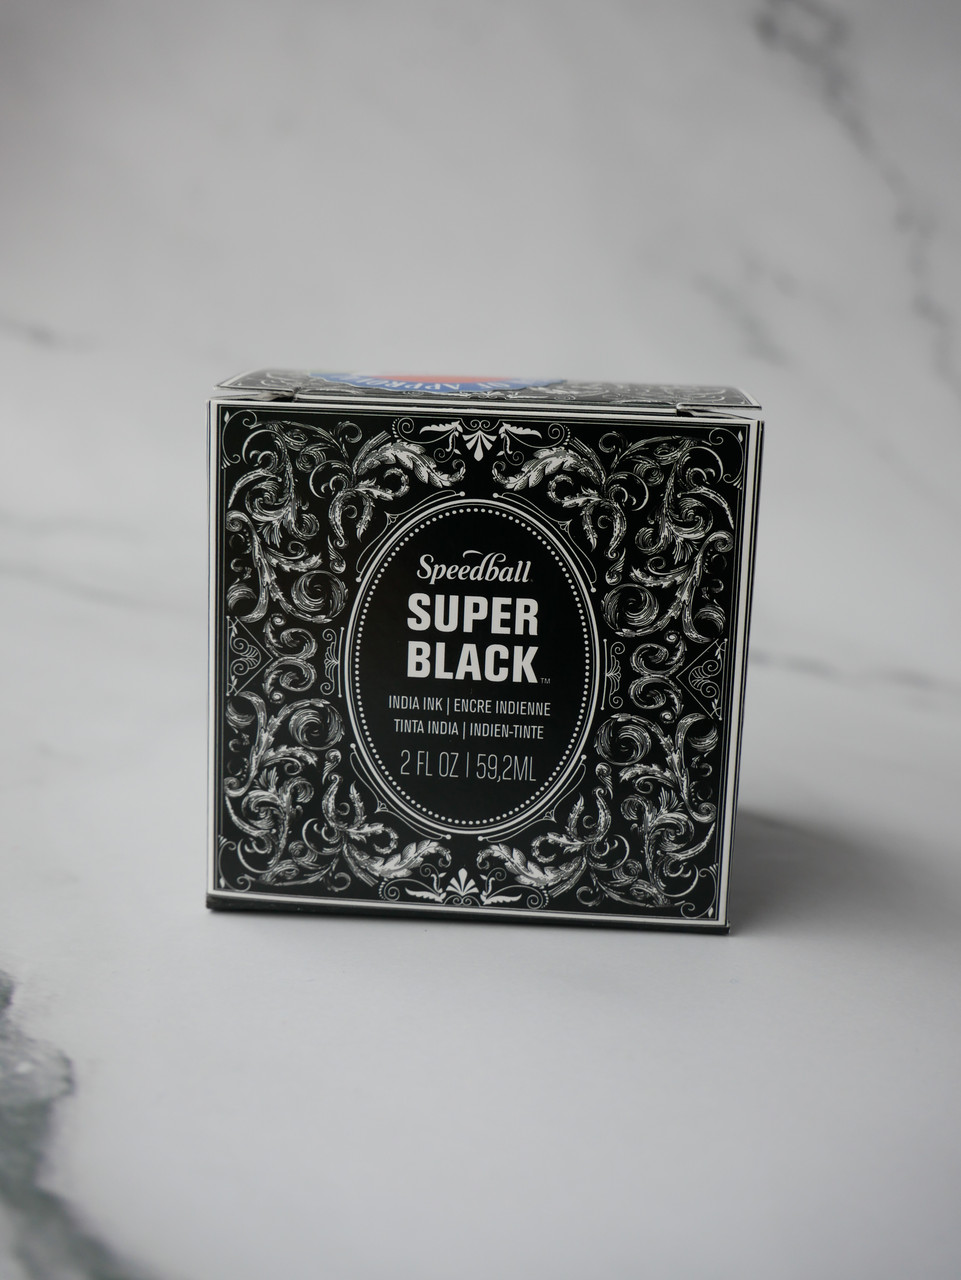 Super Black India Ink (Speedball)